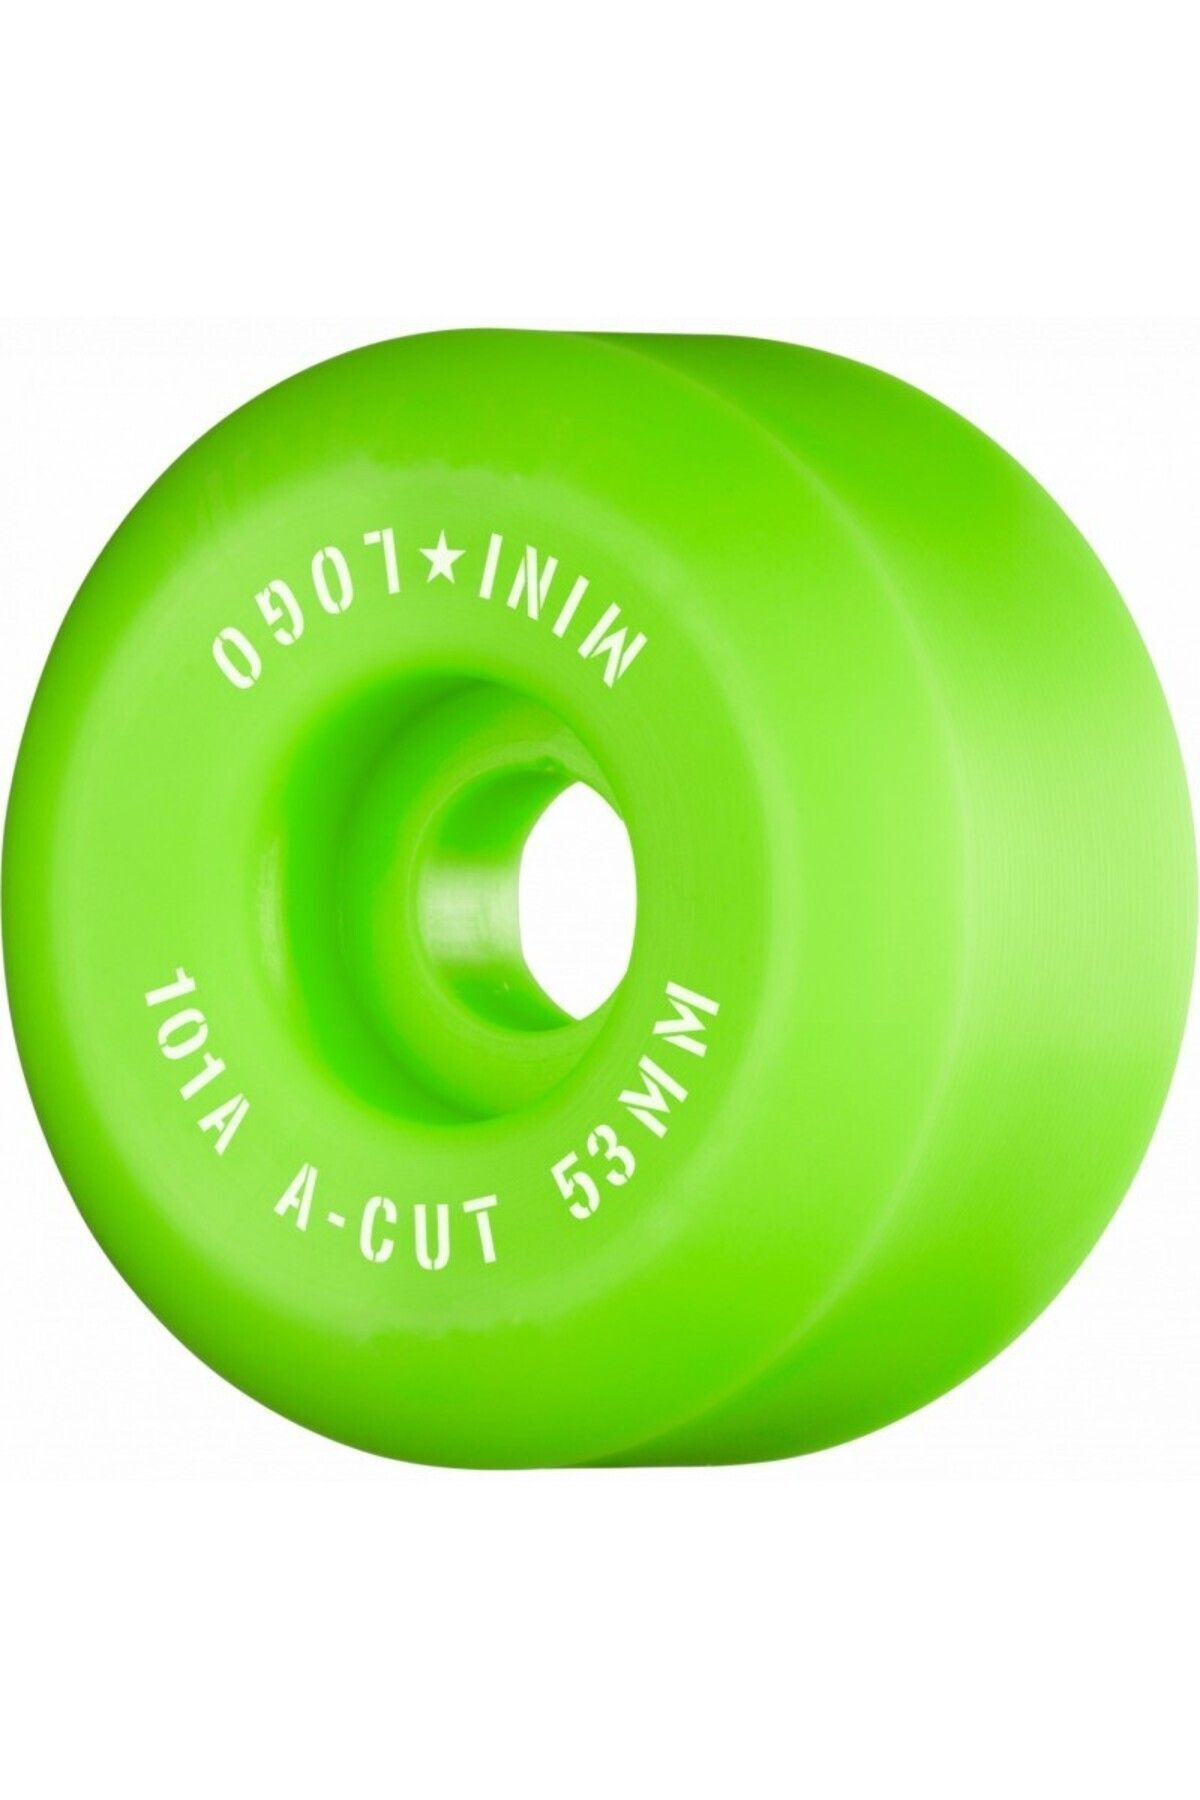 Genel Markalar Mını Logo Kaykay Tekerlek Setı Green A Cut "2" 53mm 101a